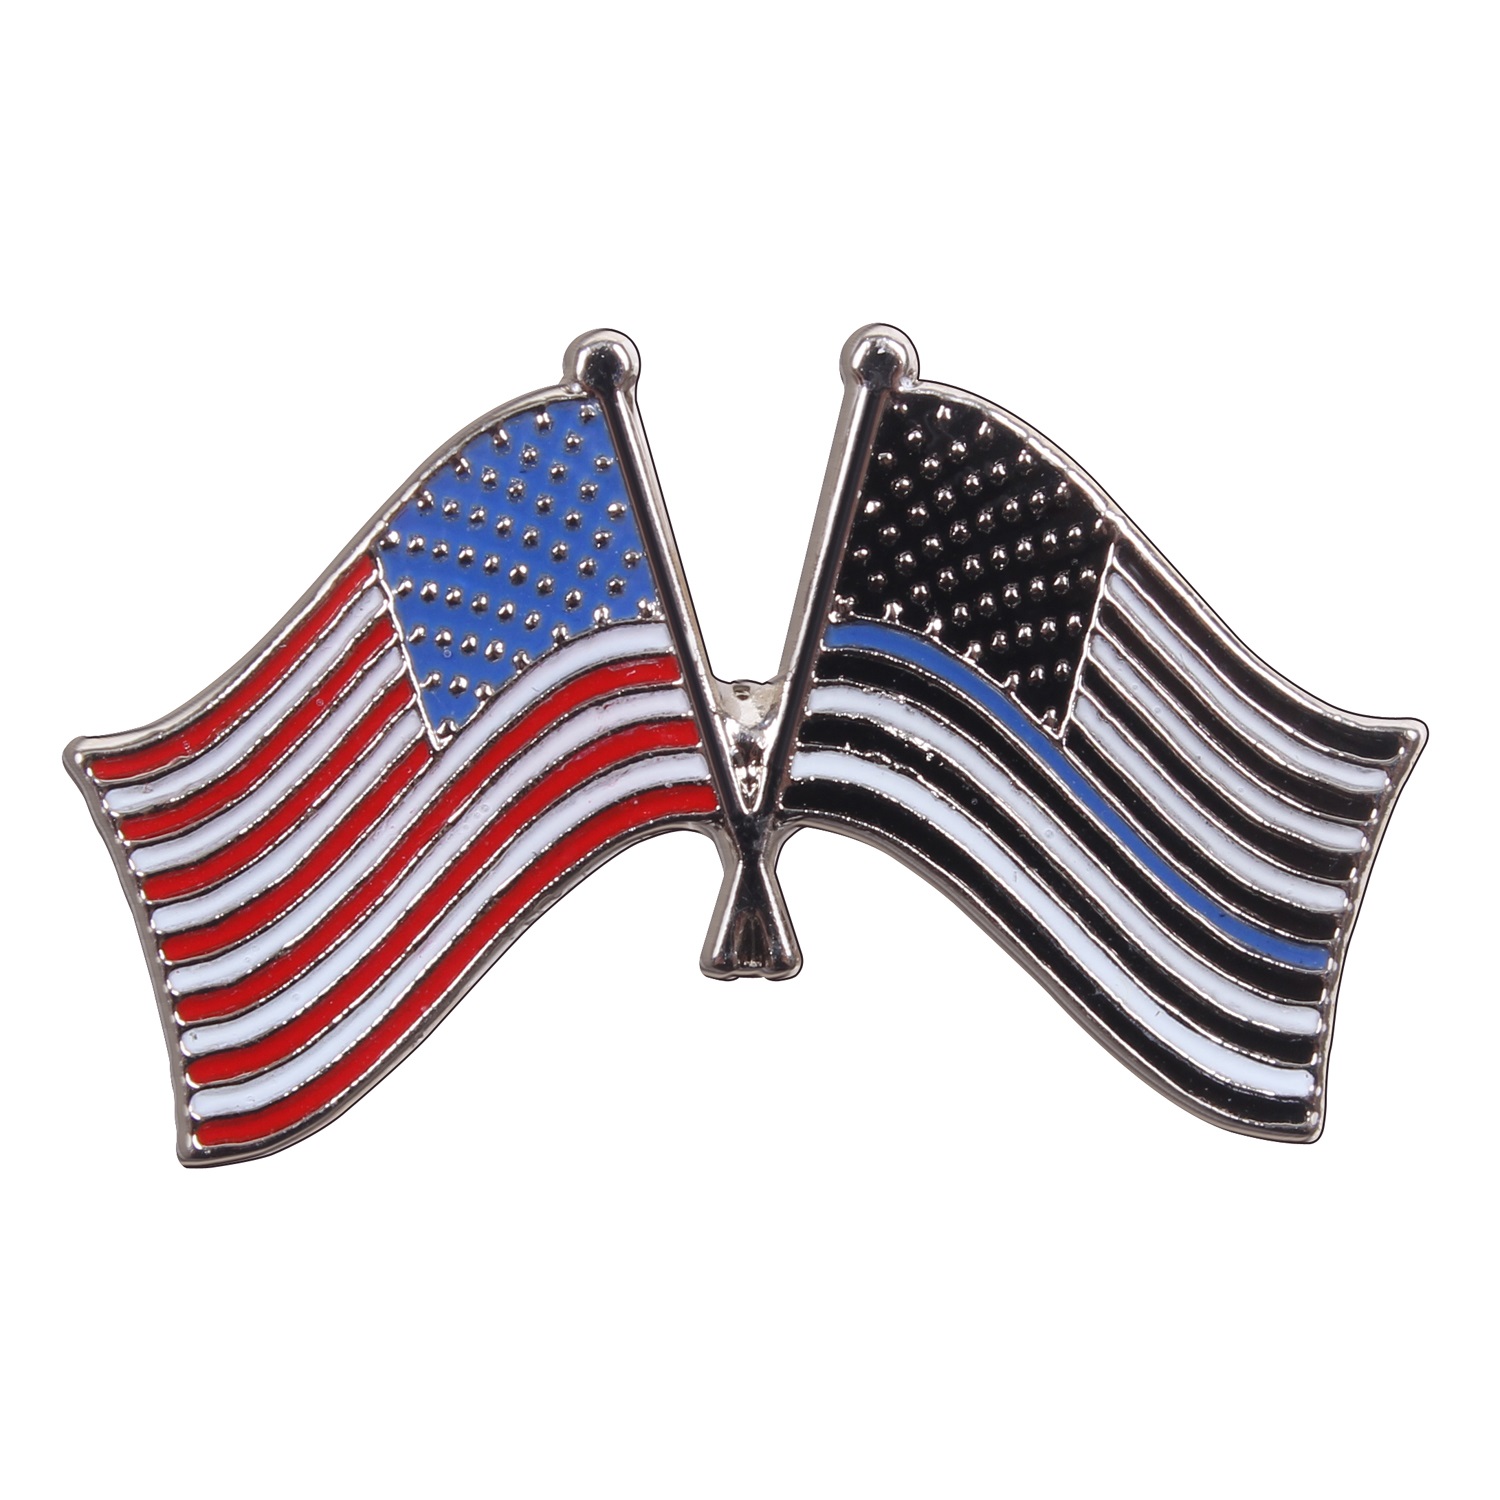 Odznak vlajka USA barevn a s modrou linkou - zvtit obrzek